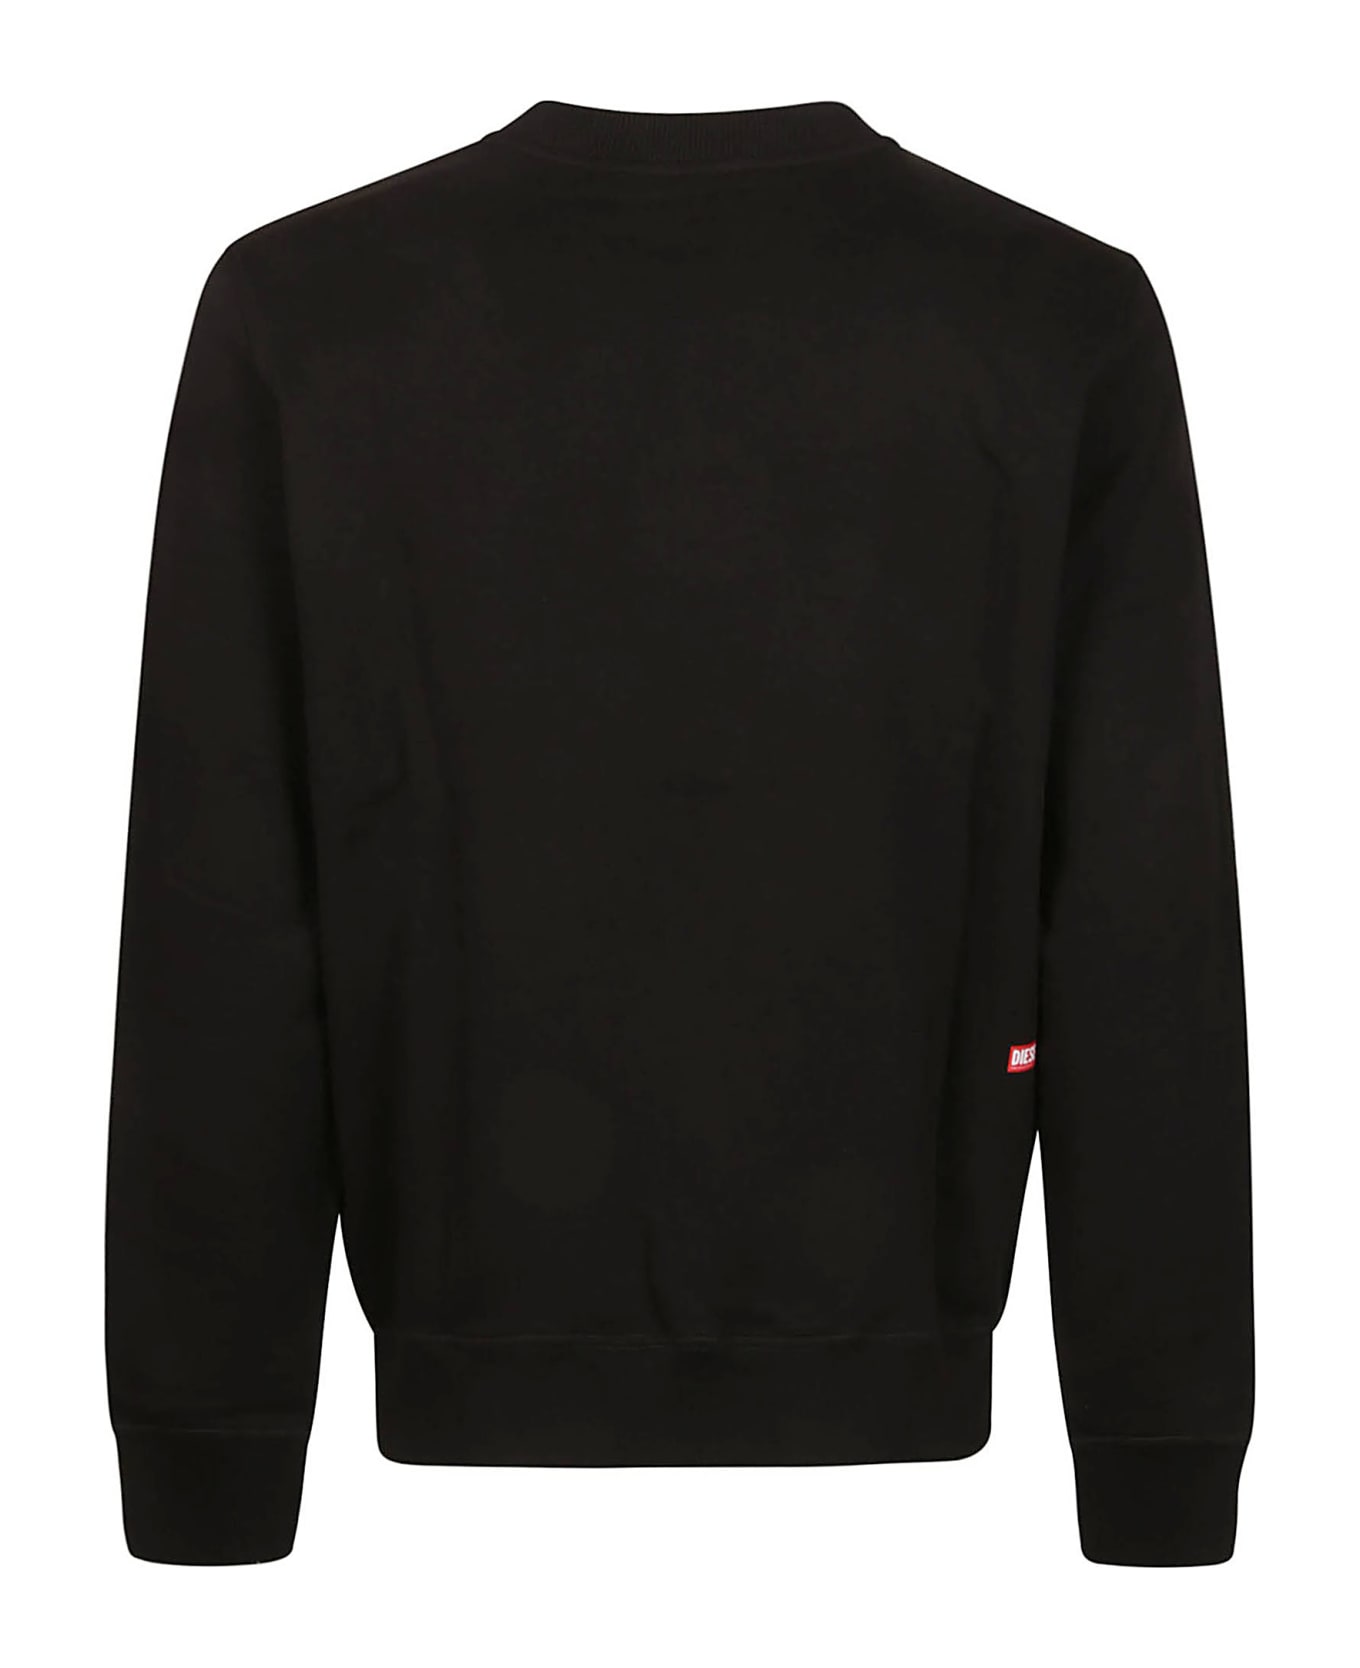 Diesel S-ginn N1 Sweatshirt - Xx Black